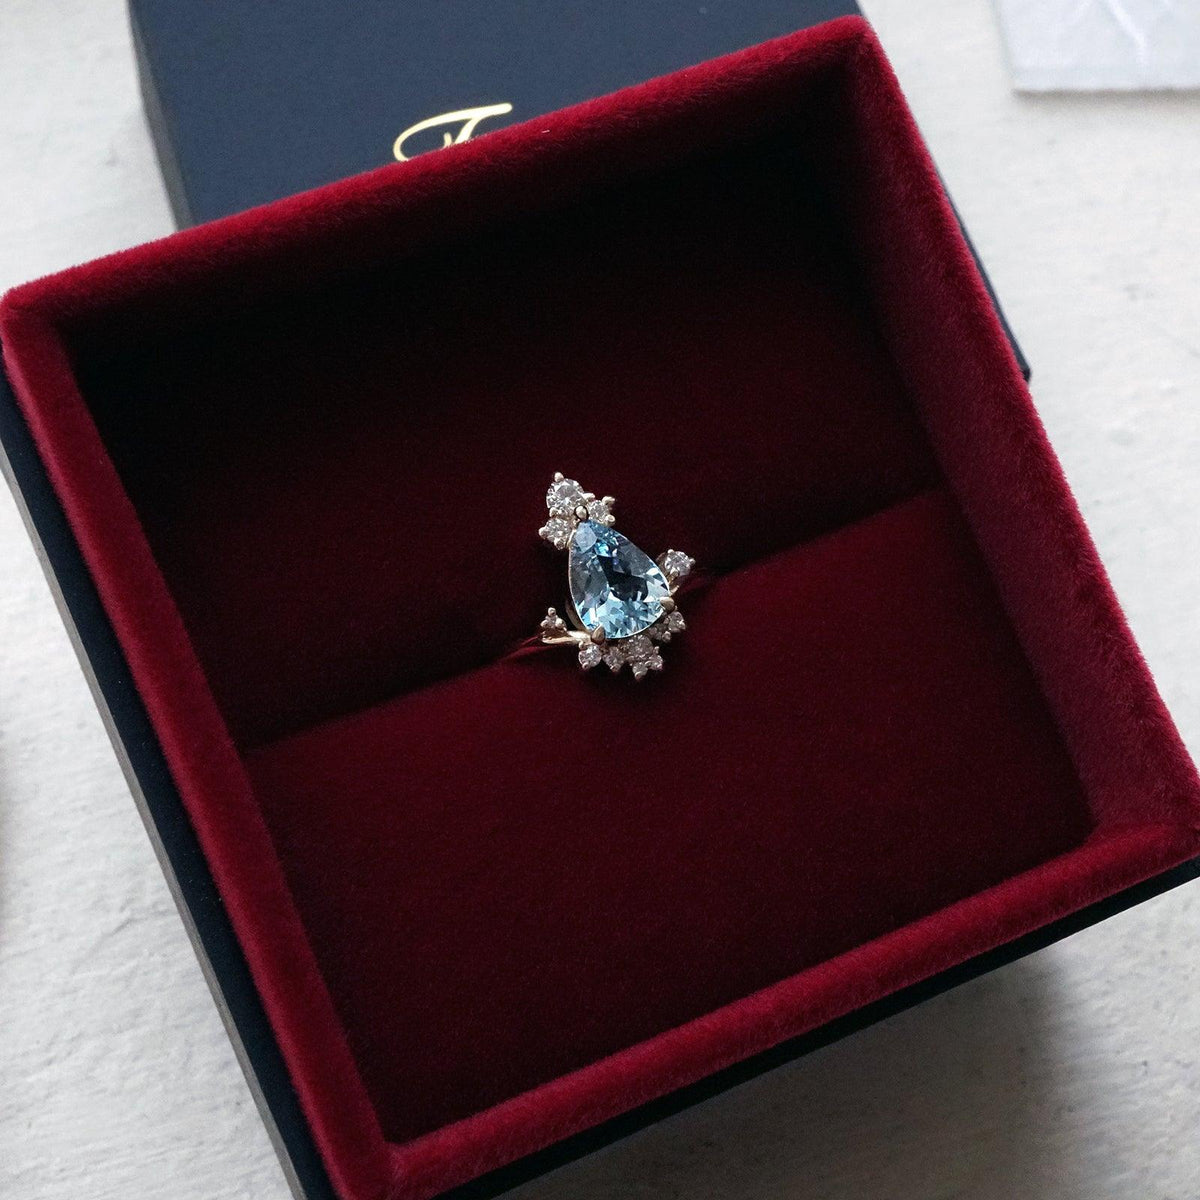 Freya Aquamarine Diamond Ring in 14K and 18K Gold - Tippy Taste Jewelry